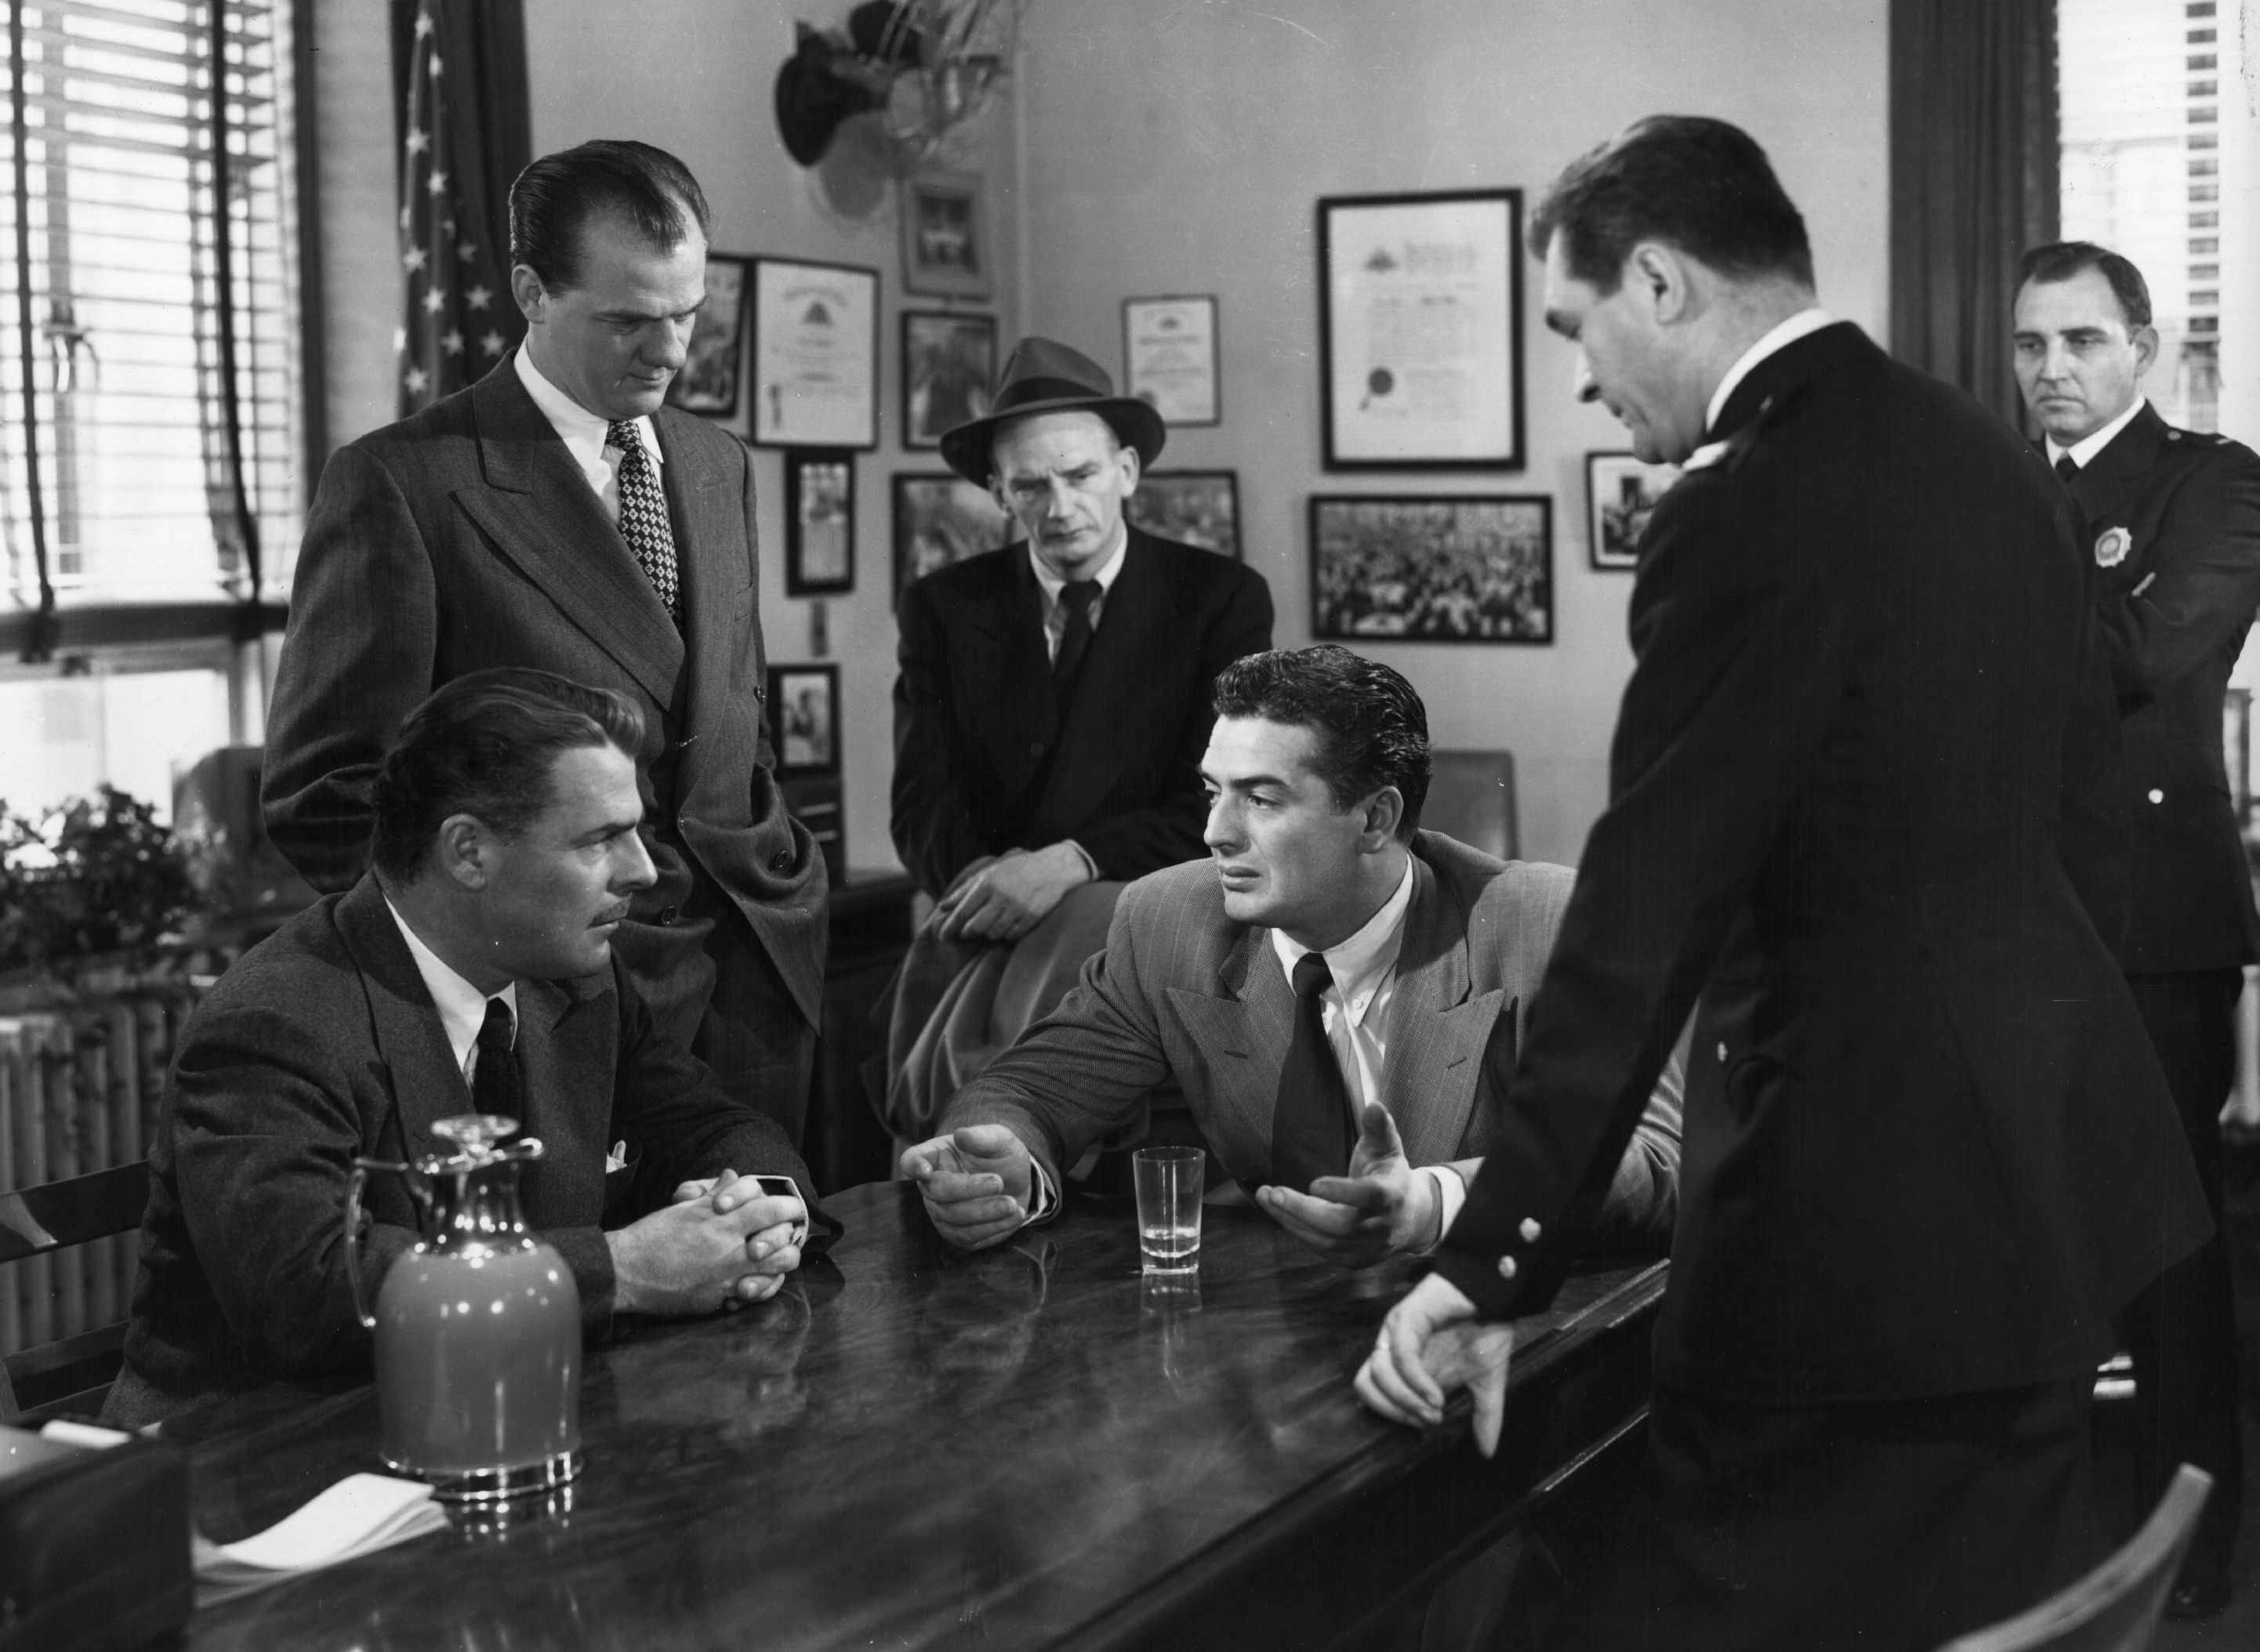 Still of Karl Malden, Victor Mature, Brian Donlevy and Millard Mitchell in Kiss of Death (1947)